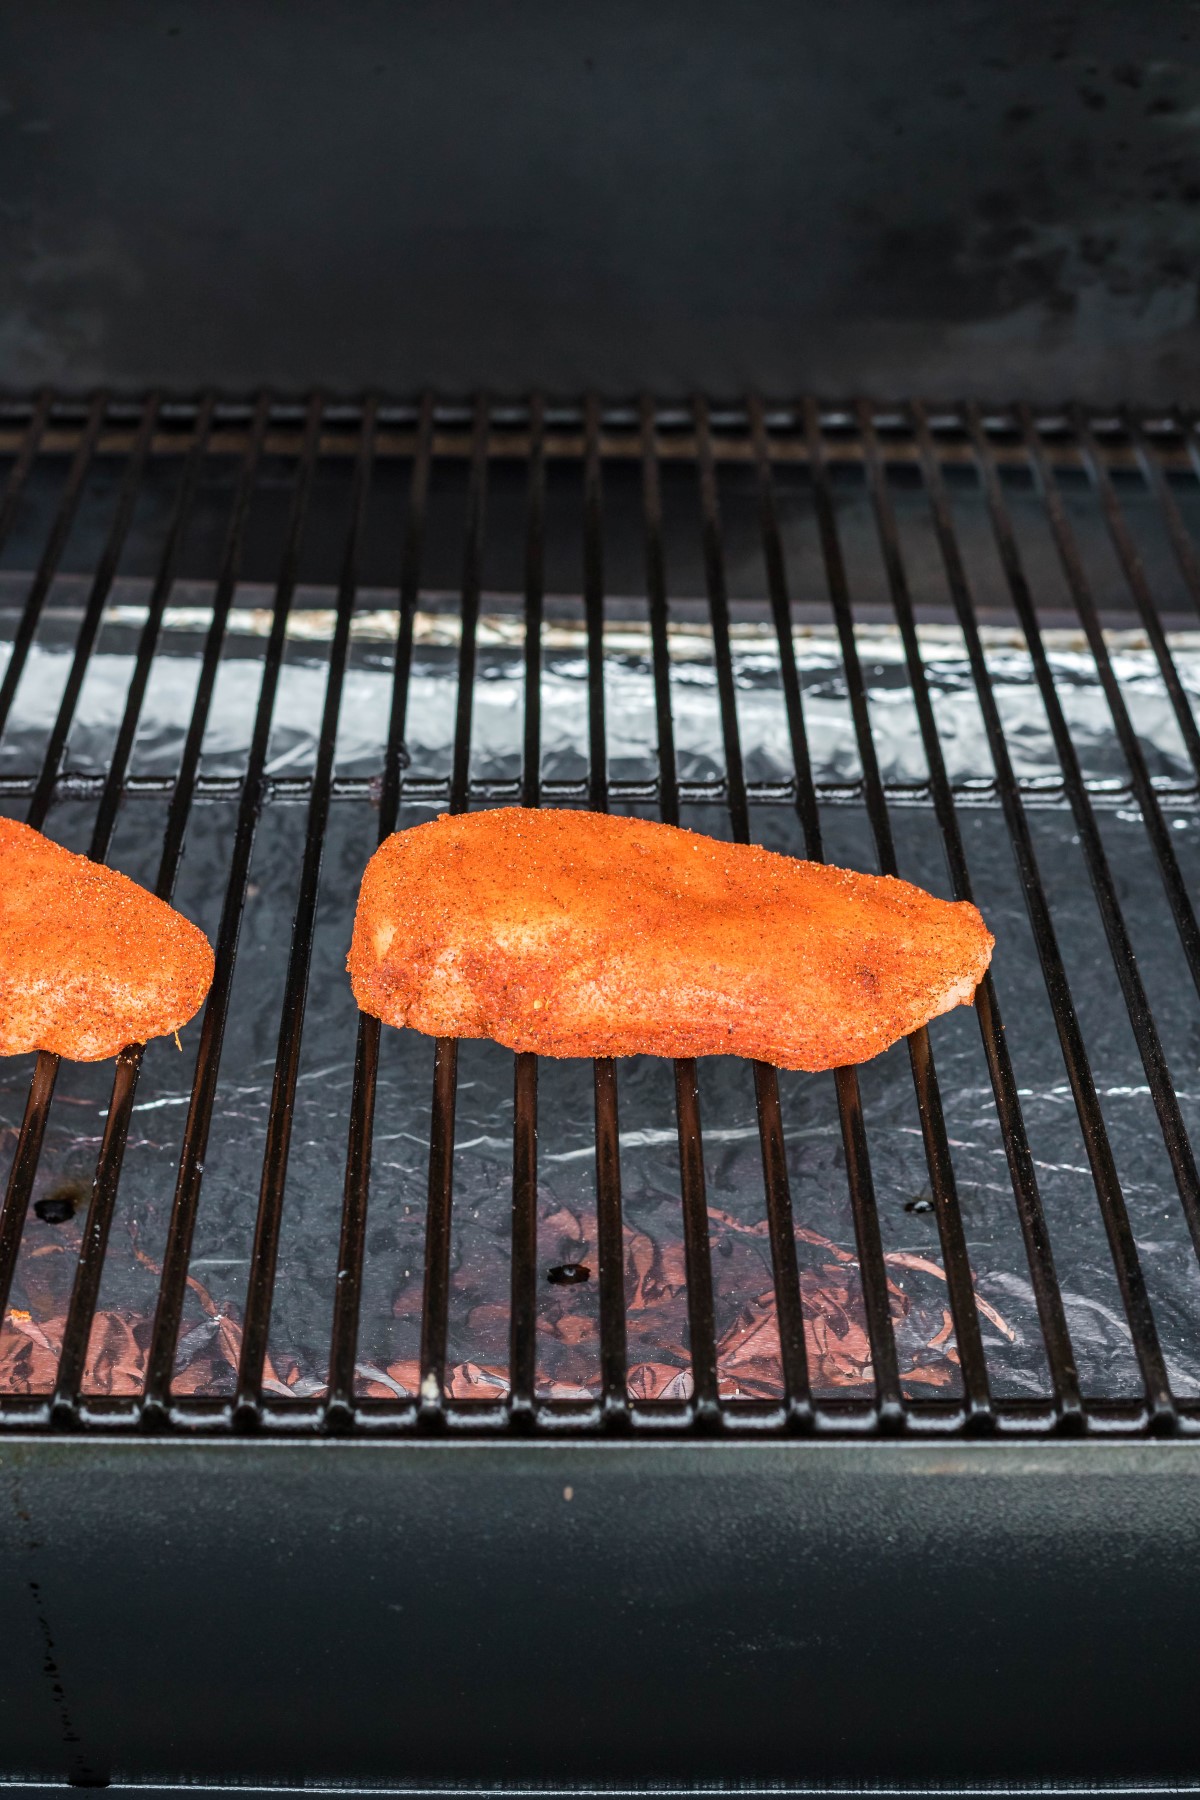 bbq rub chicken breasts on a bbq grill